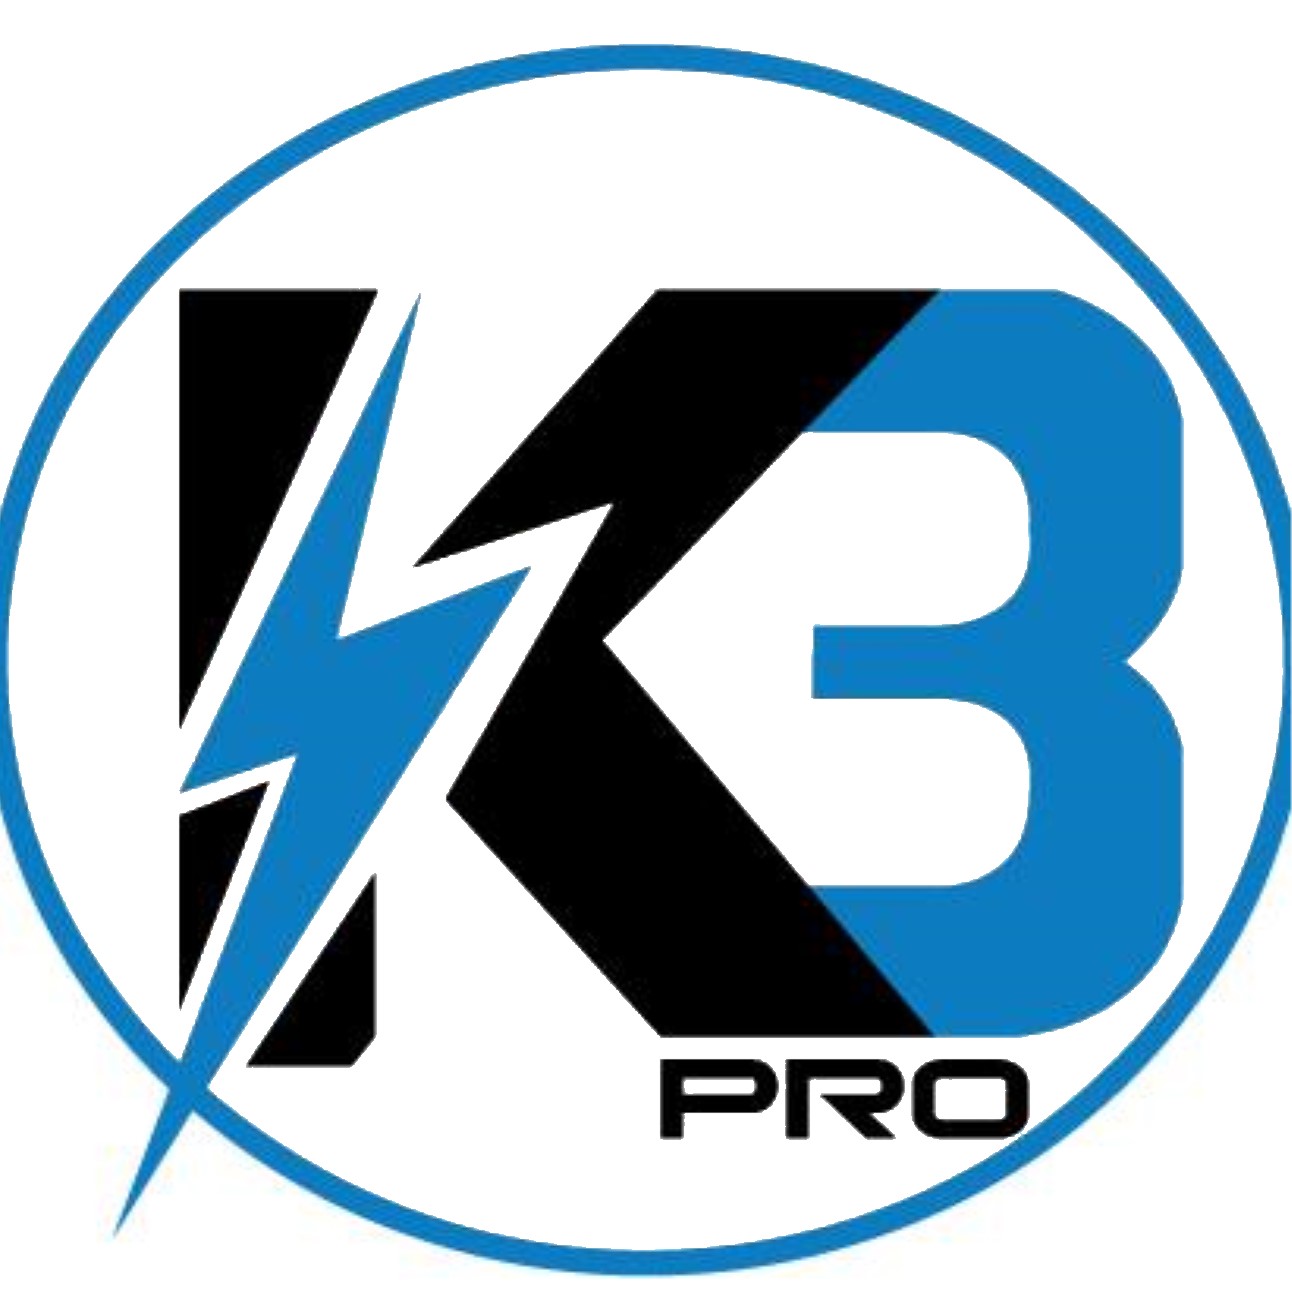 K3pro for Mobile Accessories